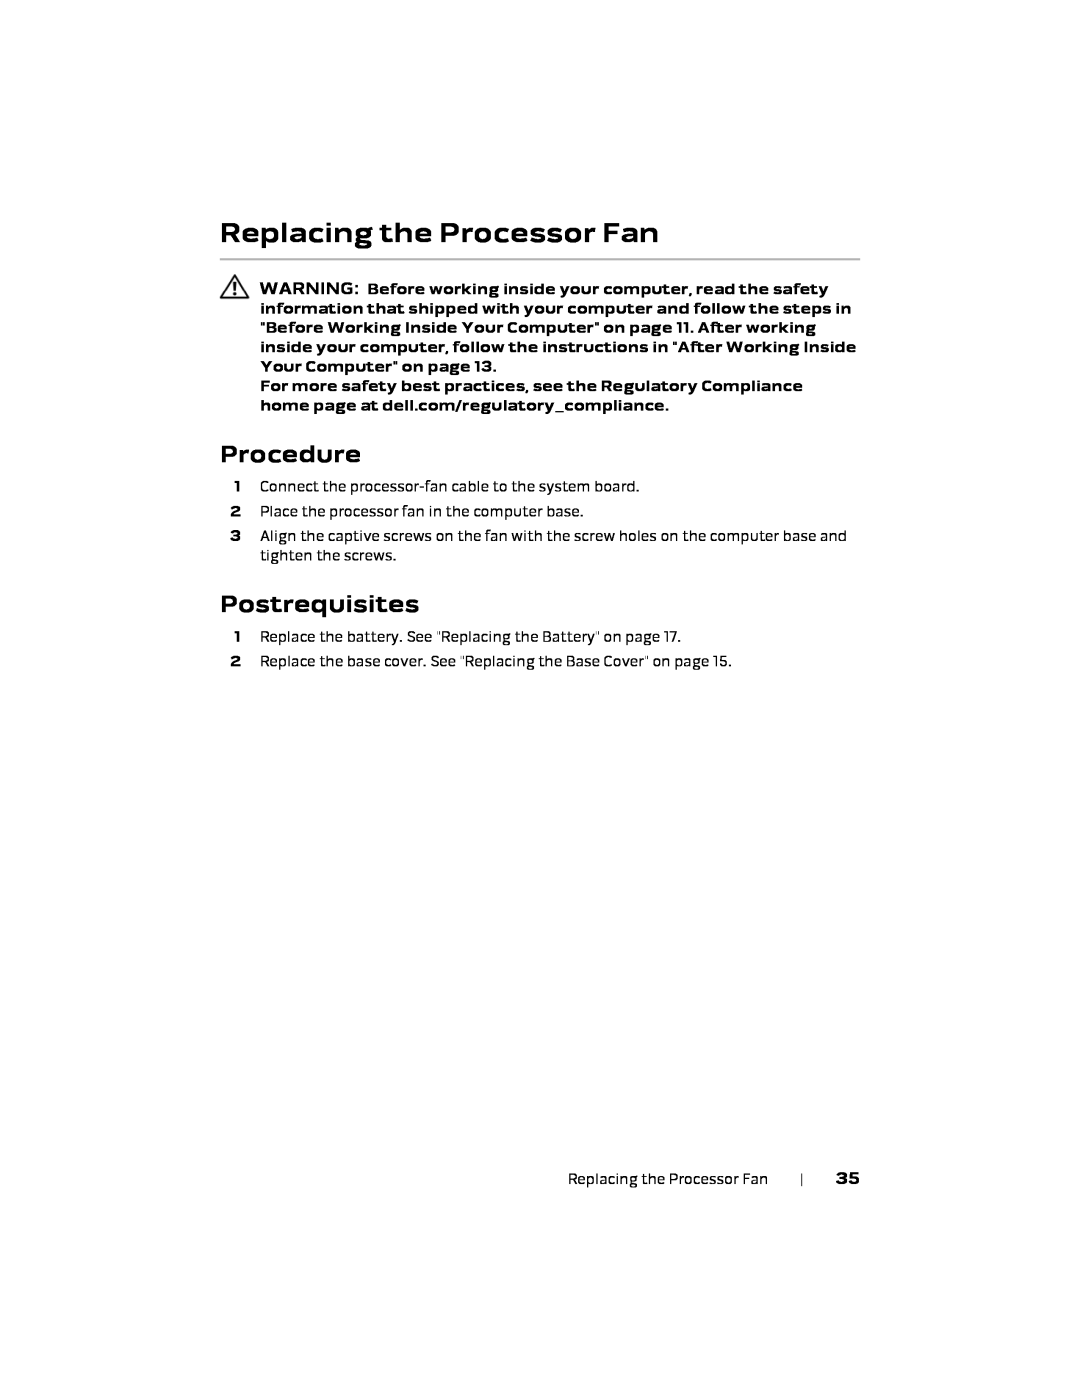 Alienware 17 R1, P18E owner manual Replacing the Processor Fan, Procedure, Postrequisites 